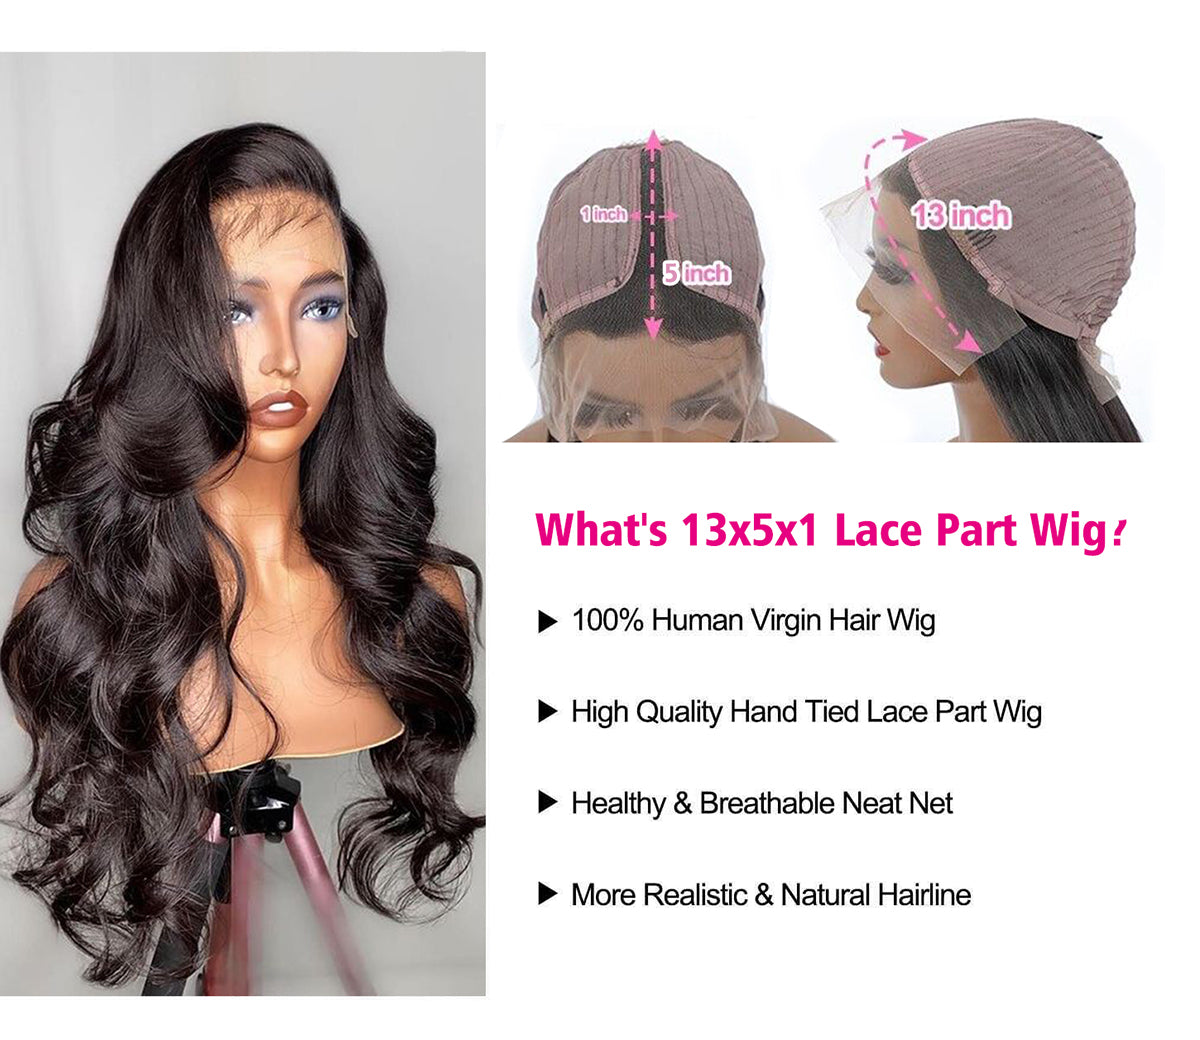 13x5x1 T Part Body Wave Lace Front Human Hair Wigs Brazilian Lace Part Wigs